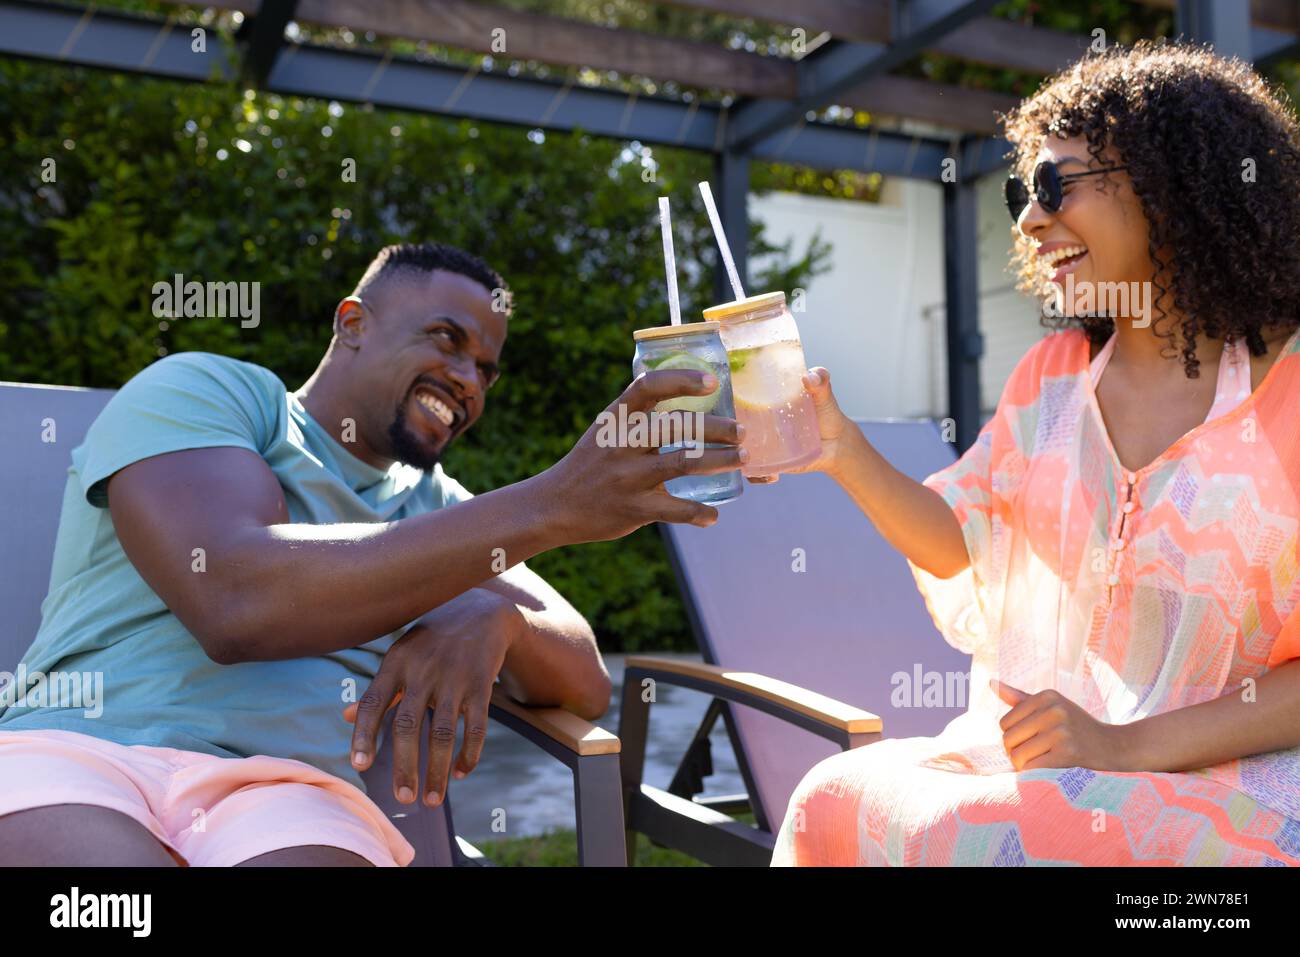 Casually dressed duo enjoys sunny outdoor drinks, sharing joy. Stock Photo